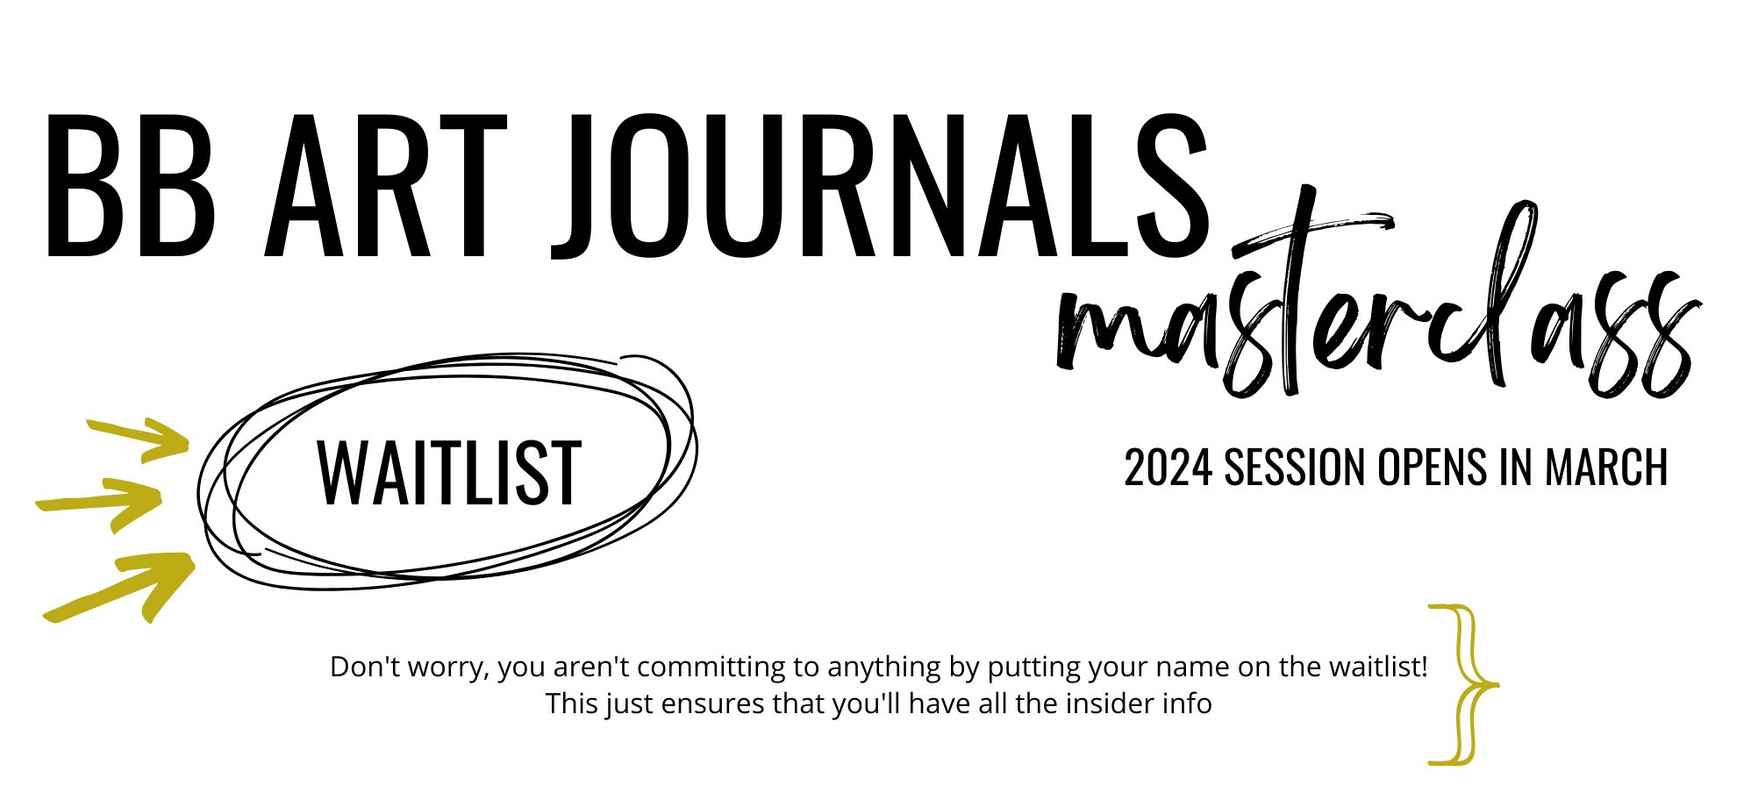 BB Art Journals Masterclass waitlist graphic updated 2-24